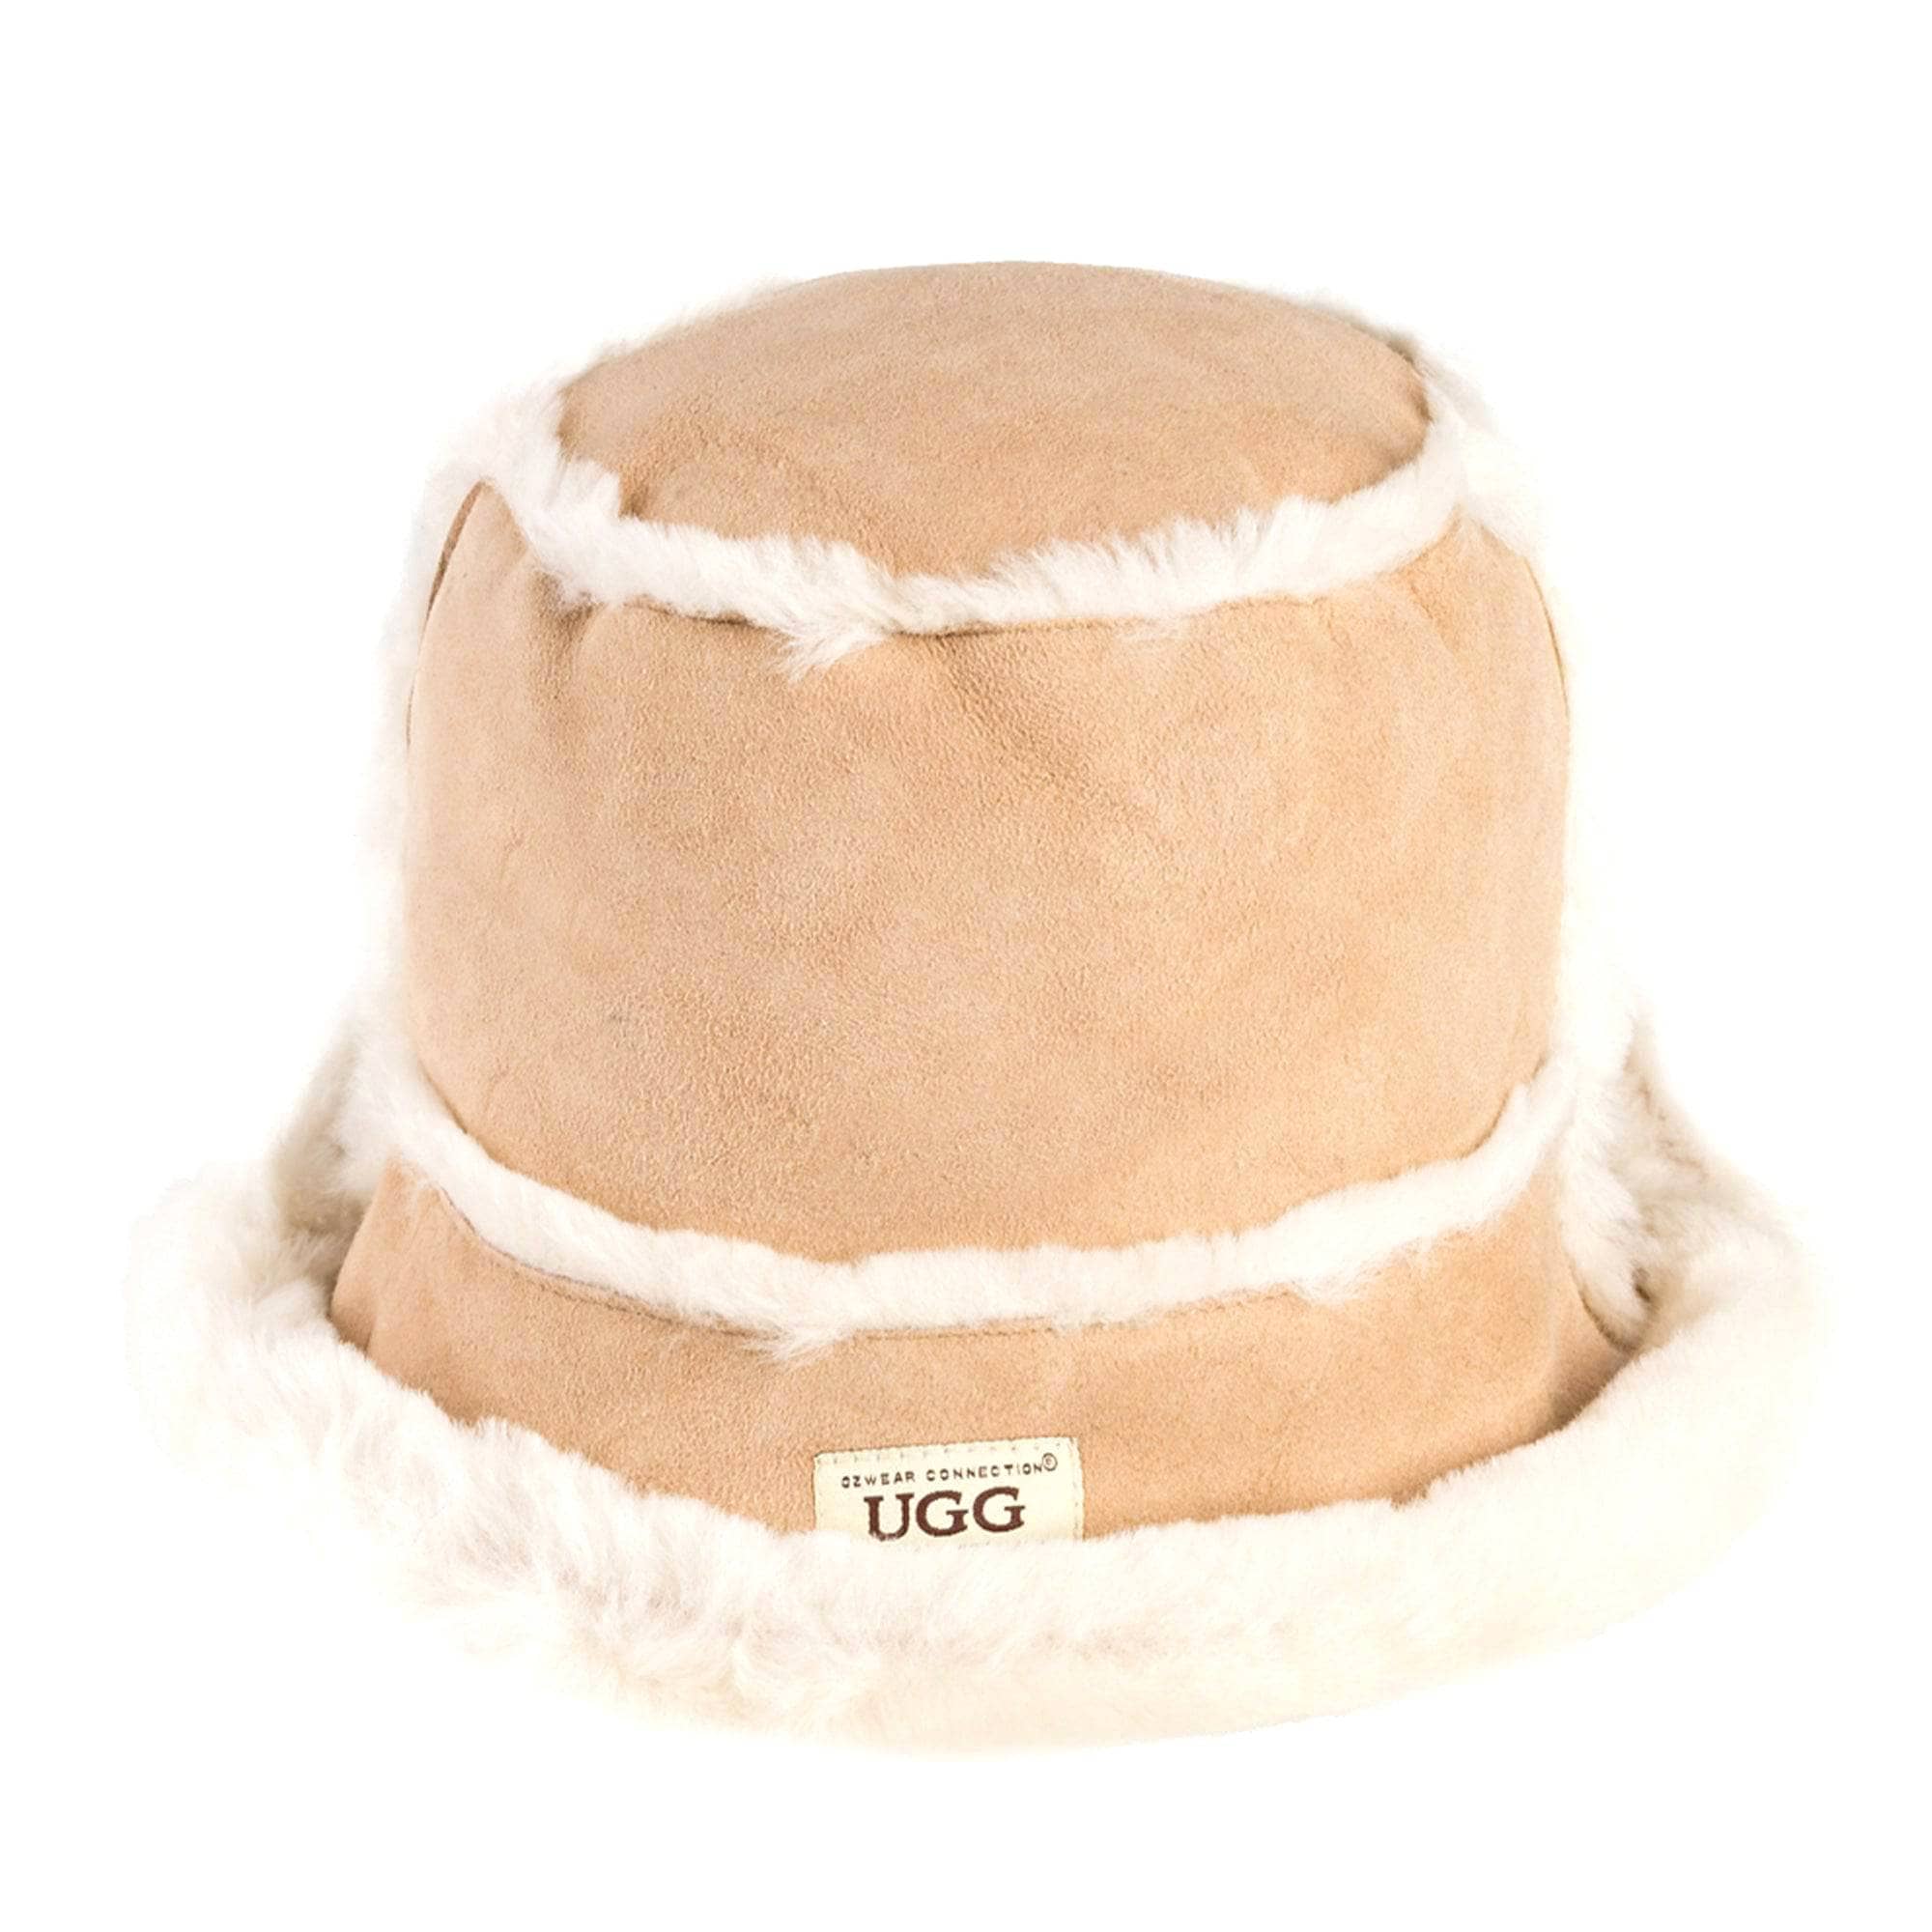  - UGG Buckle Hat Flat Top - Original UGG Australia Classic